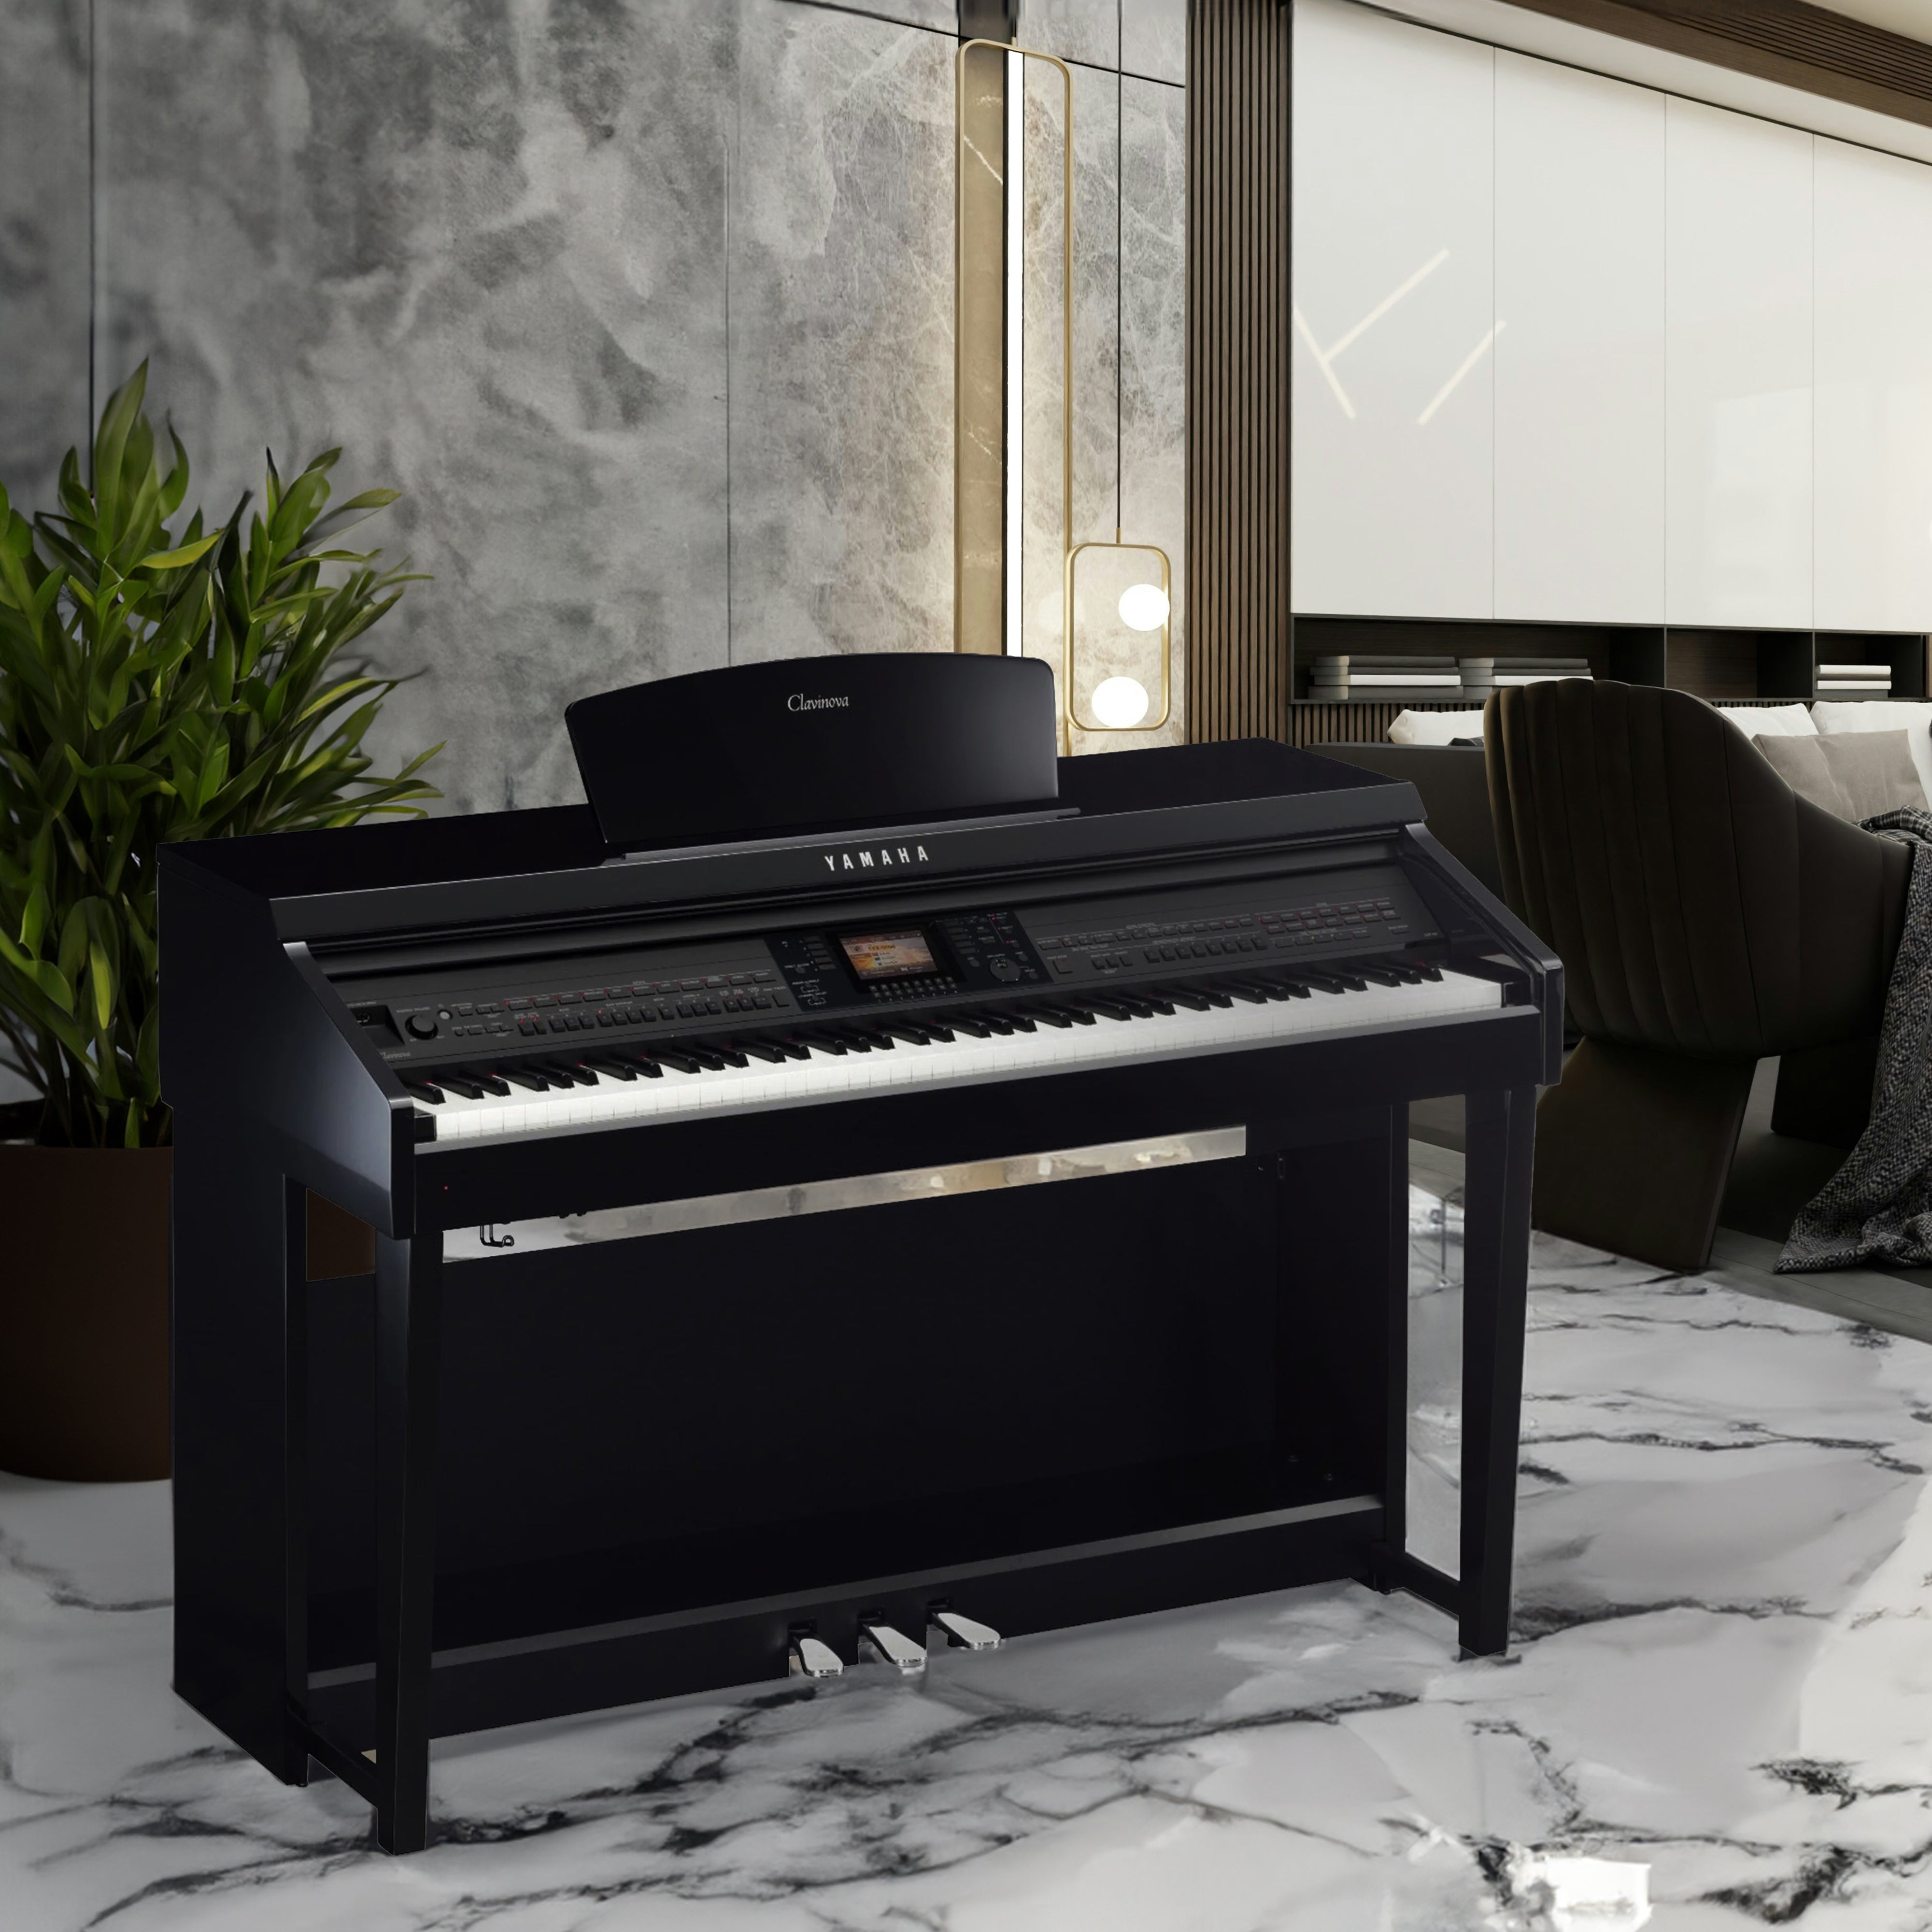 Yamaha Clavinova CVP-701 Digital Piano - Polished Ebony - in a modern living room